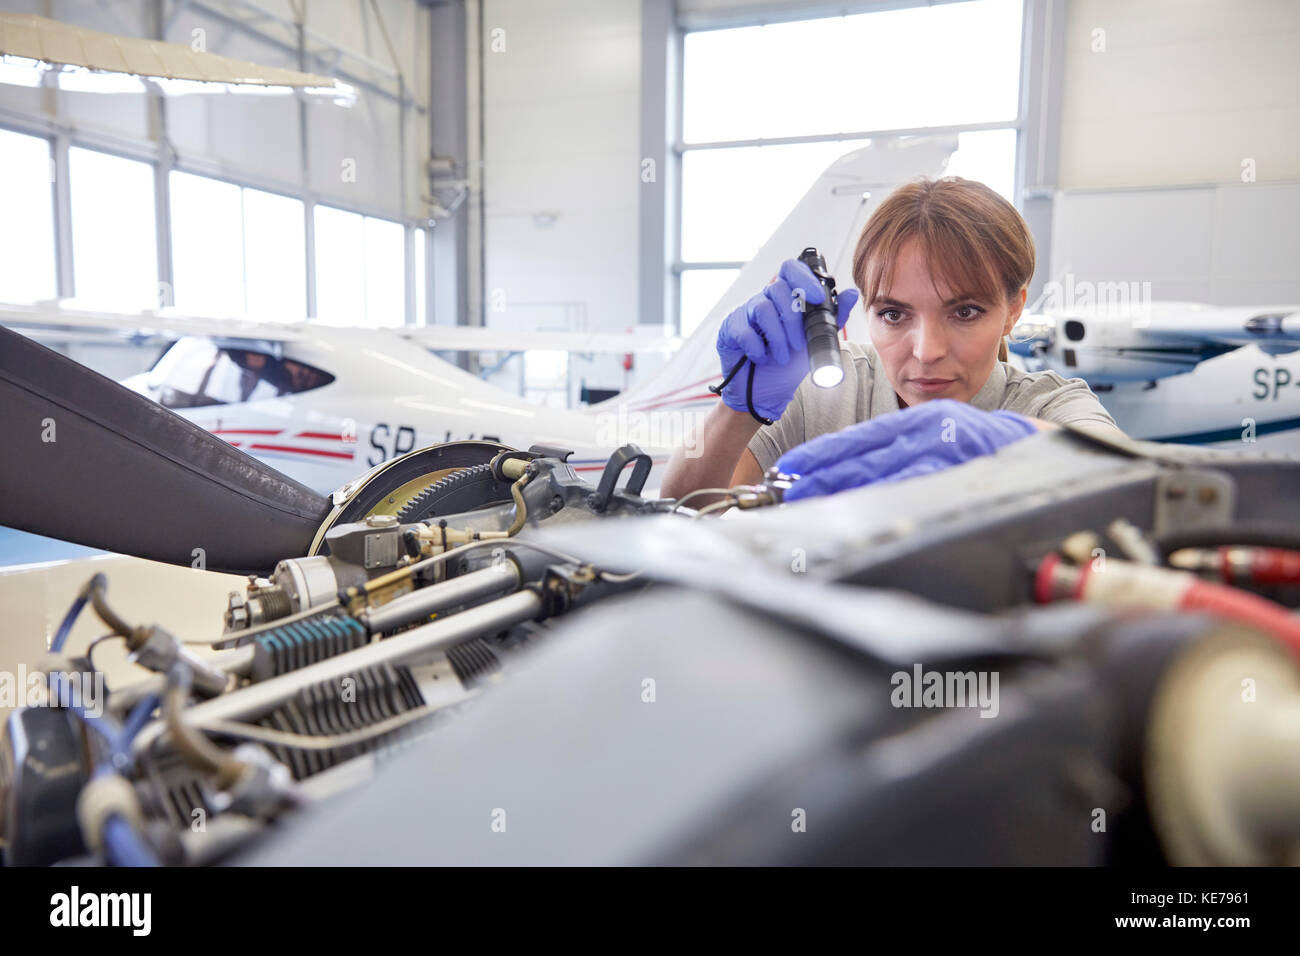 Focused female engineer mechanic with flashlight examining airplane engine in hangar Stock Photo